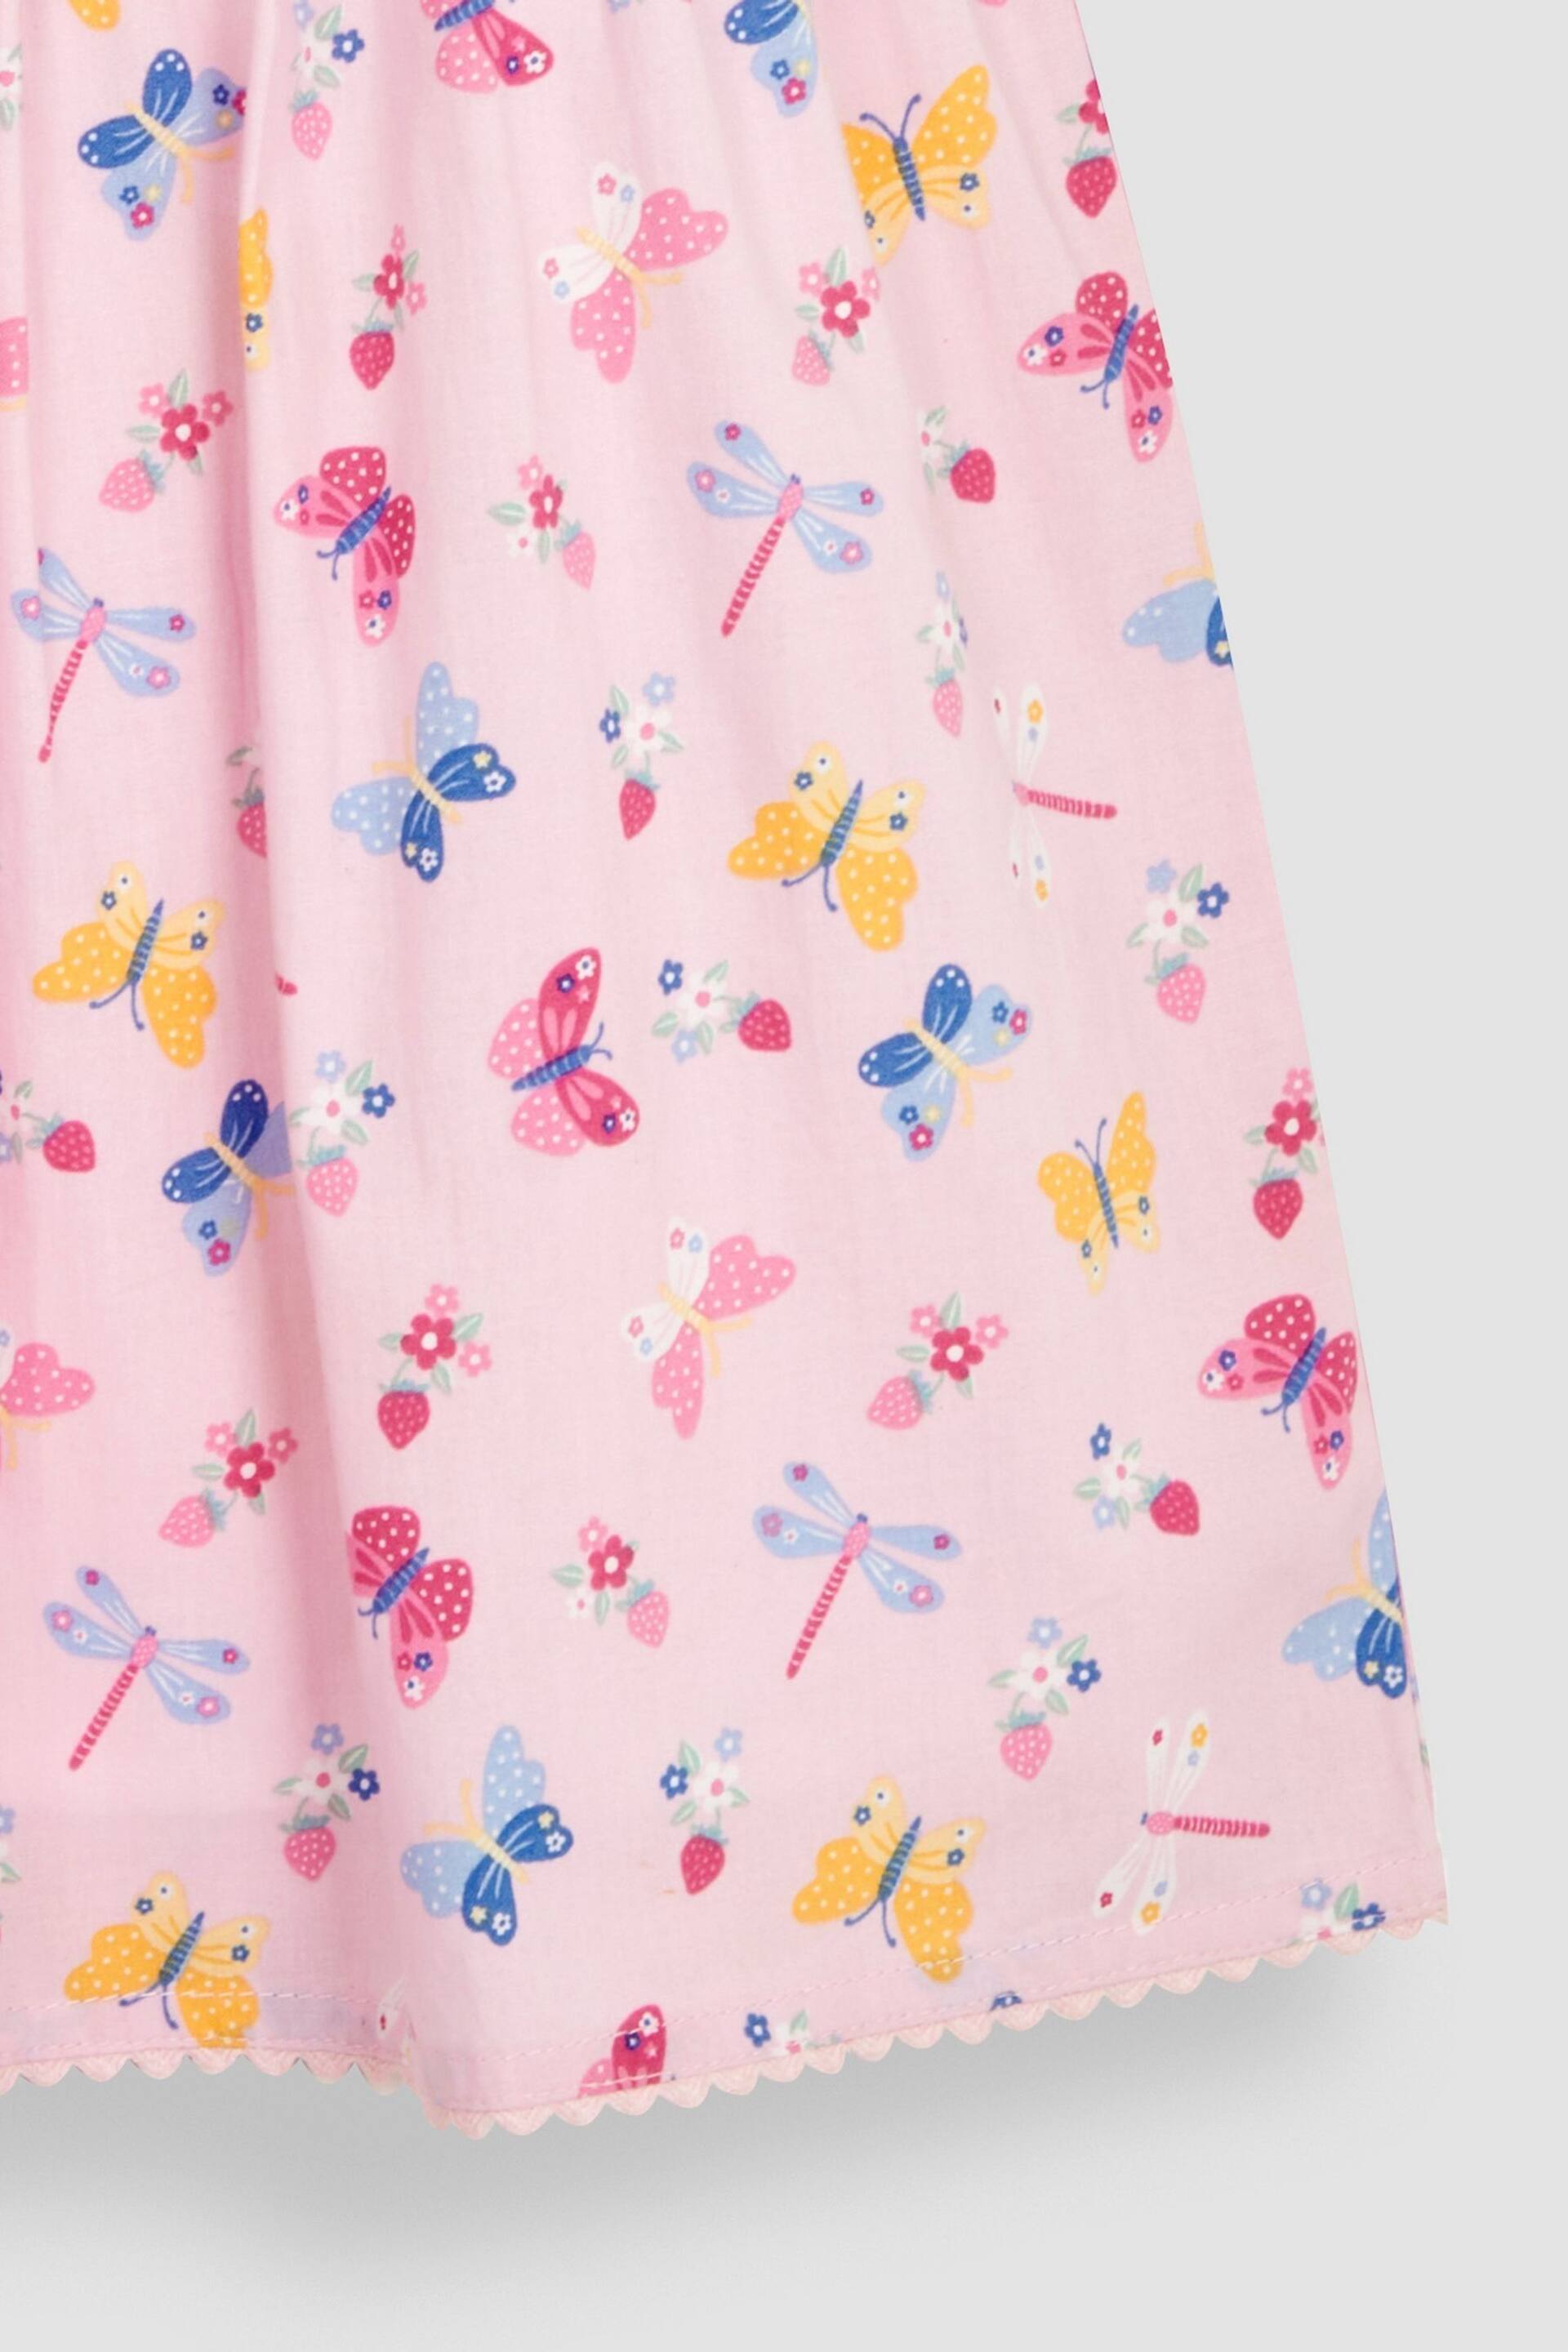 JoJo Maman Bébé Pink Butterfly & Dragonfly Floral Summer Dress - Image 3 of 3